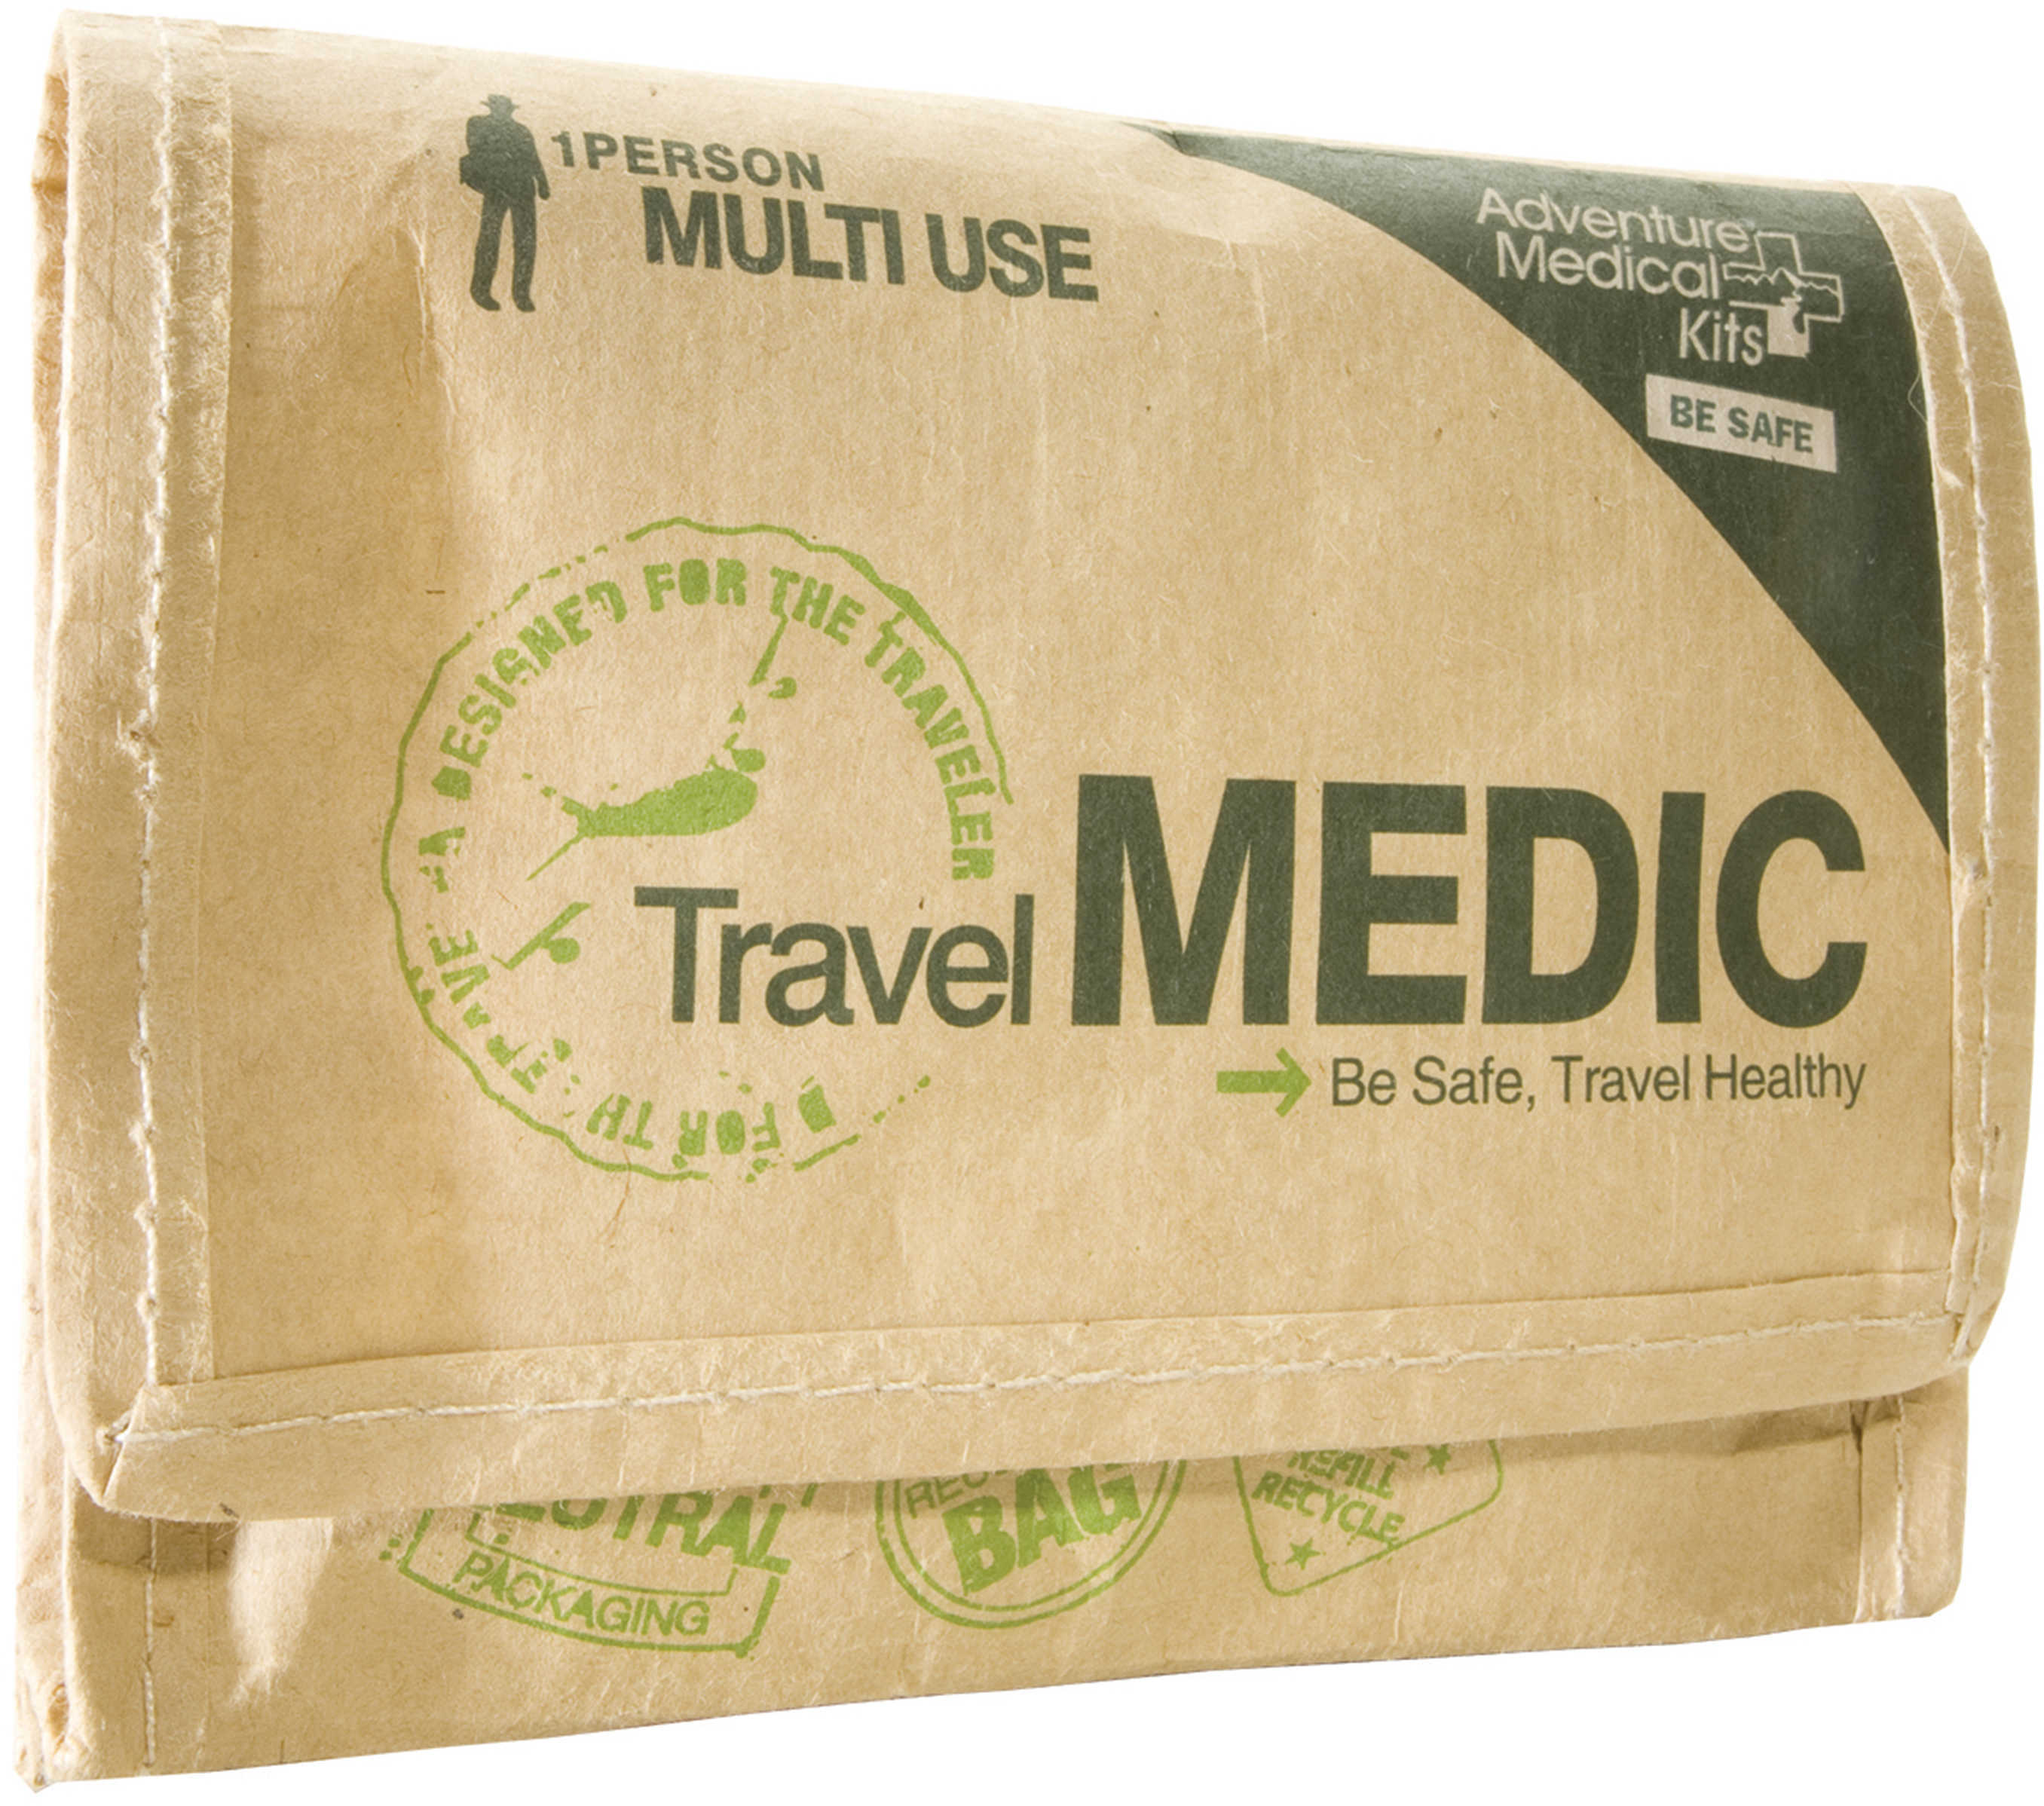 Adventure Medical Kits / Tender Corp Travel Kpp Edition 0130-0417